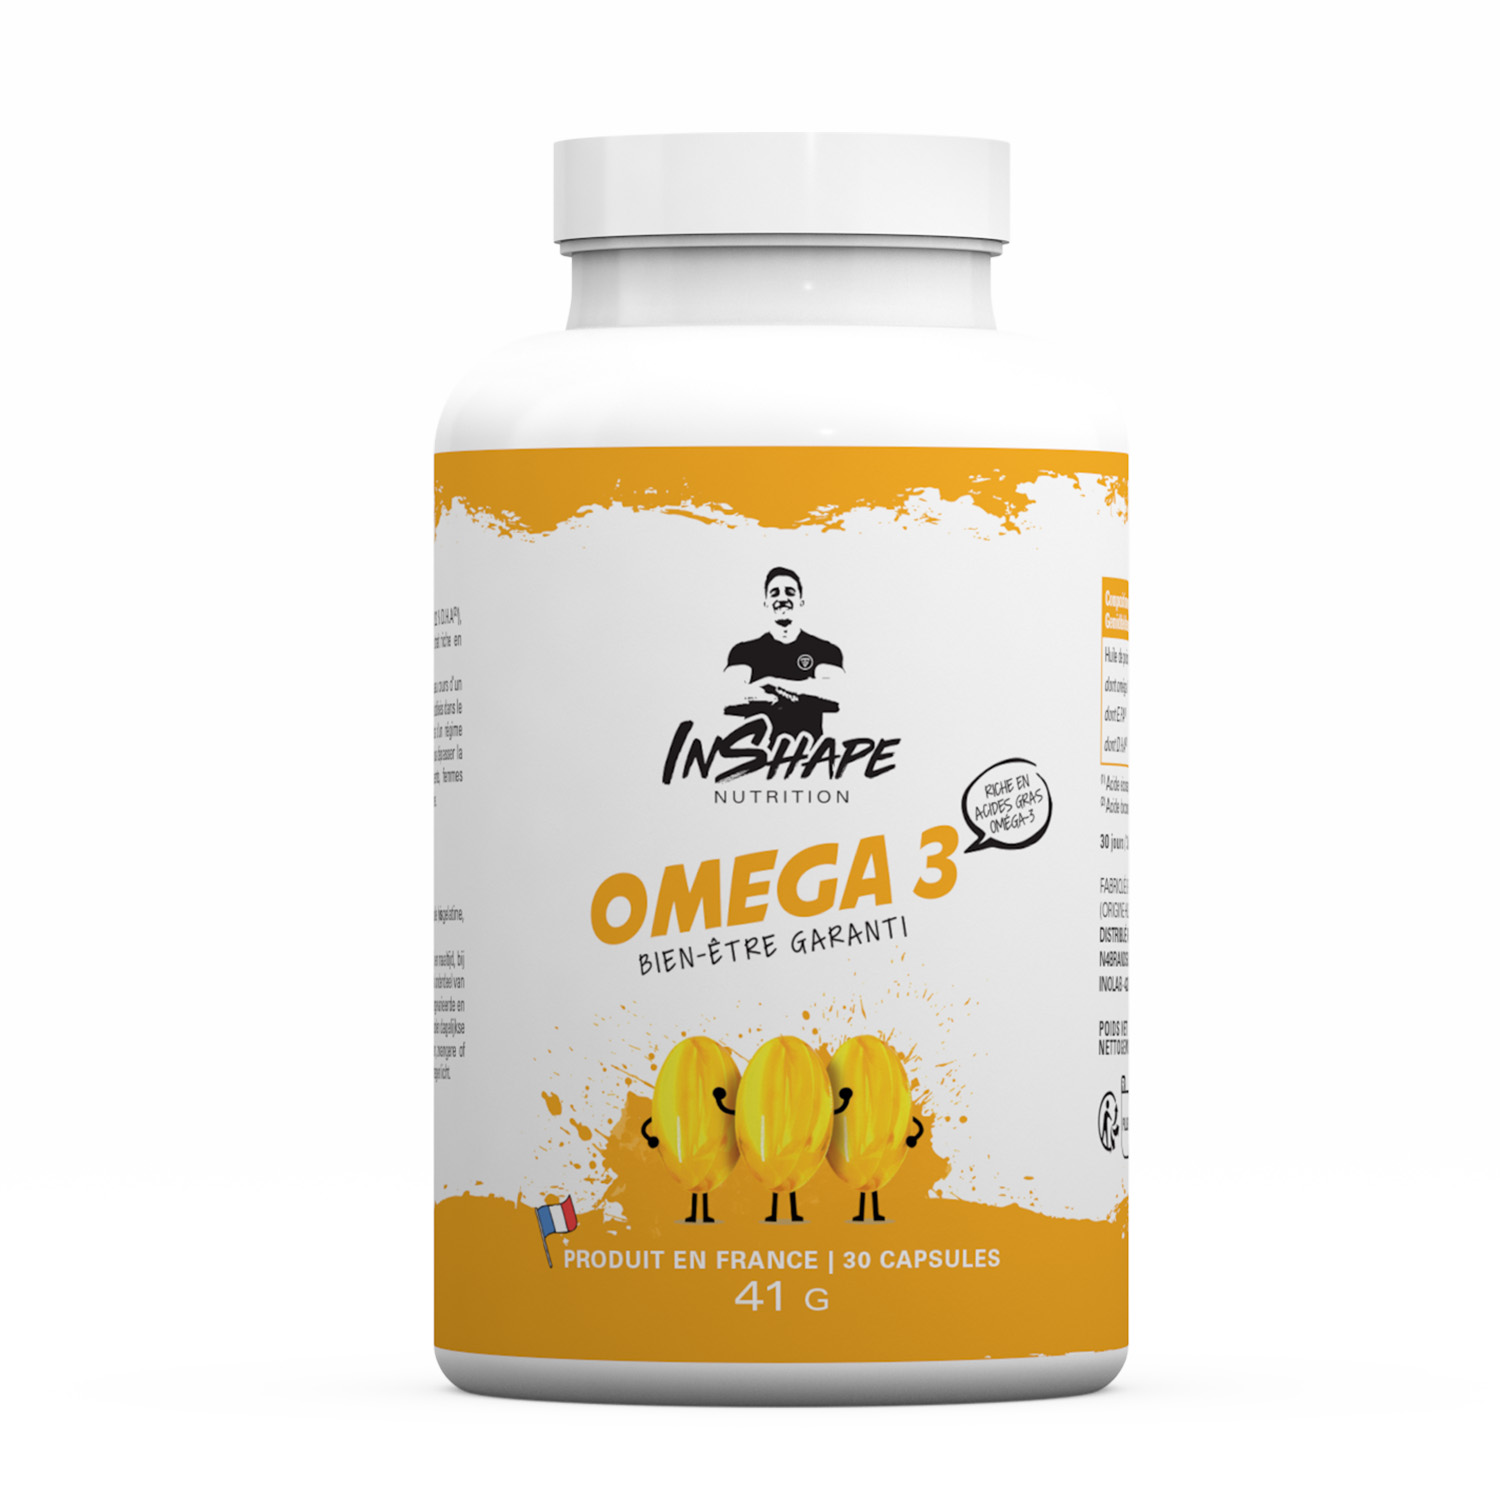  InShape Nutrition Omega 3